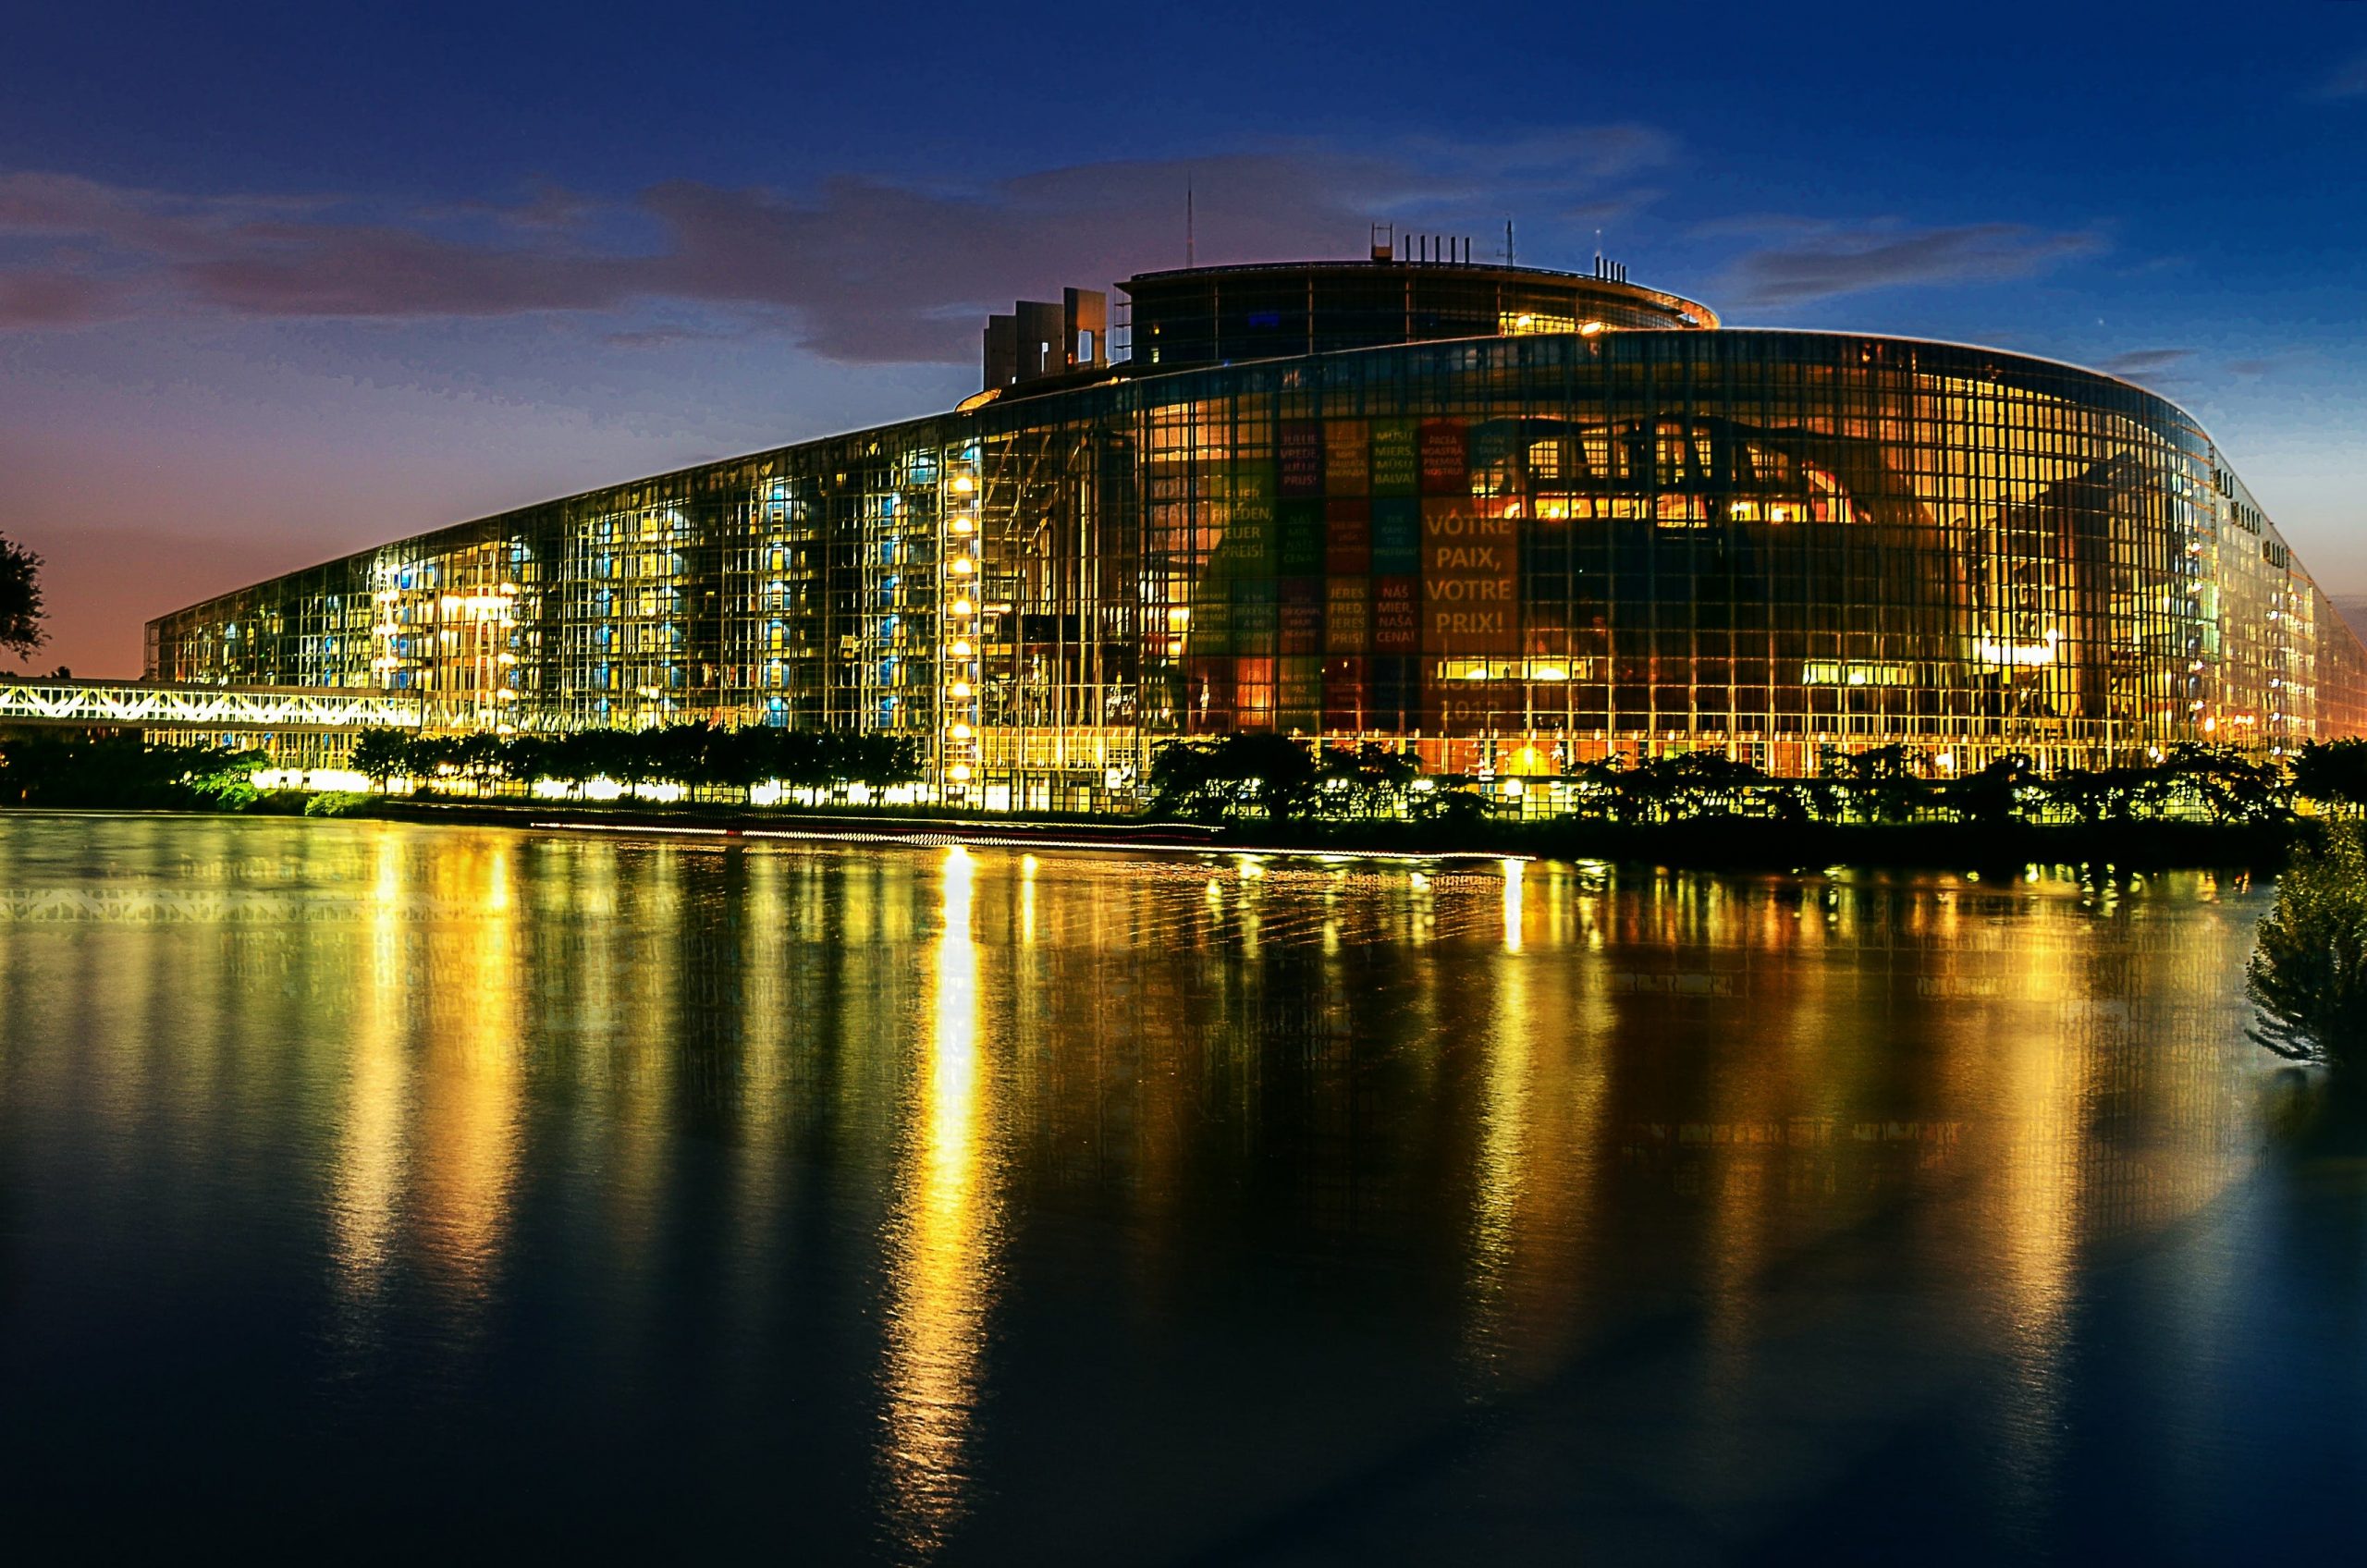 European Parliament at night.